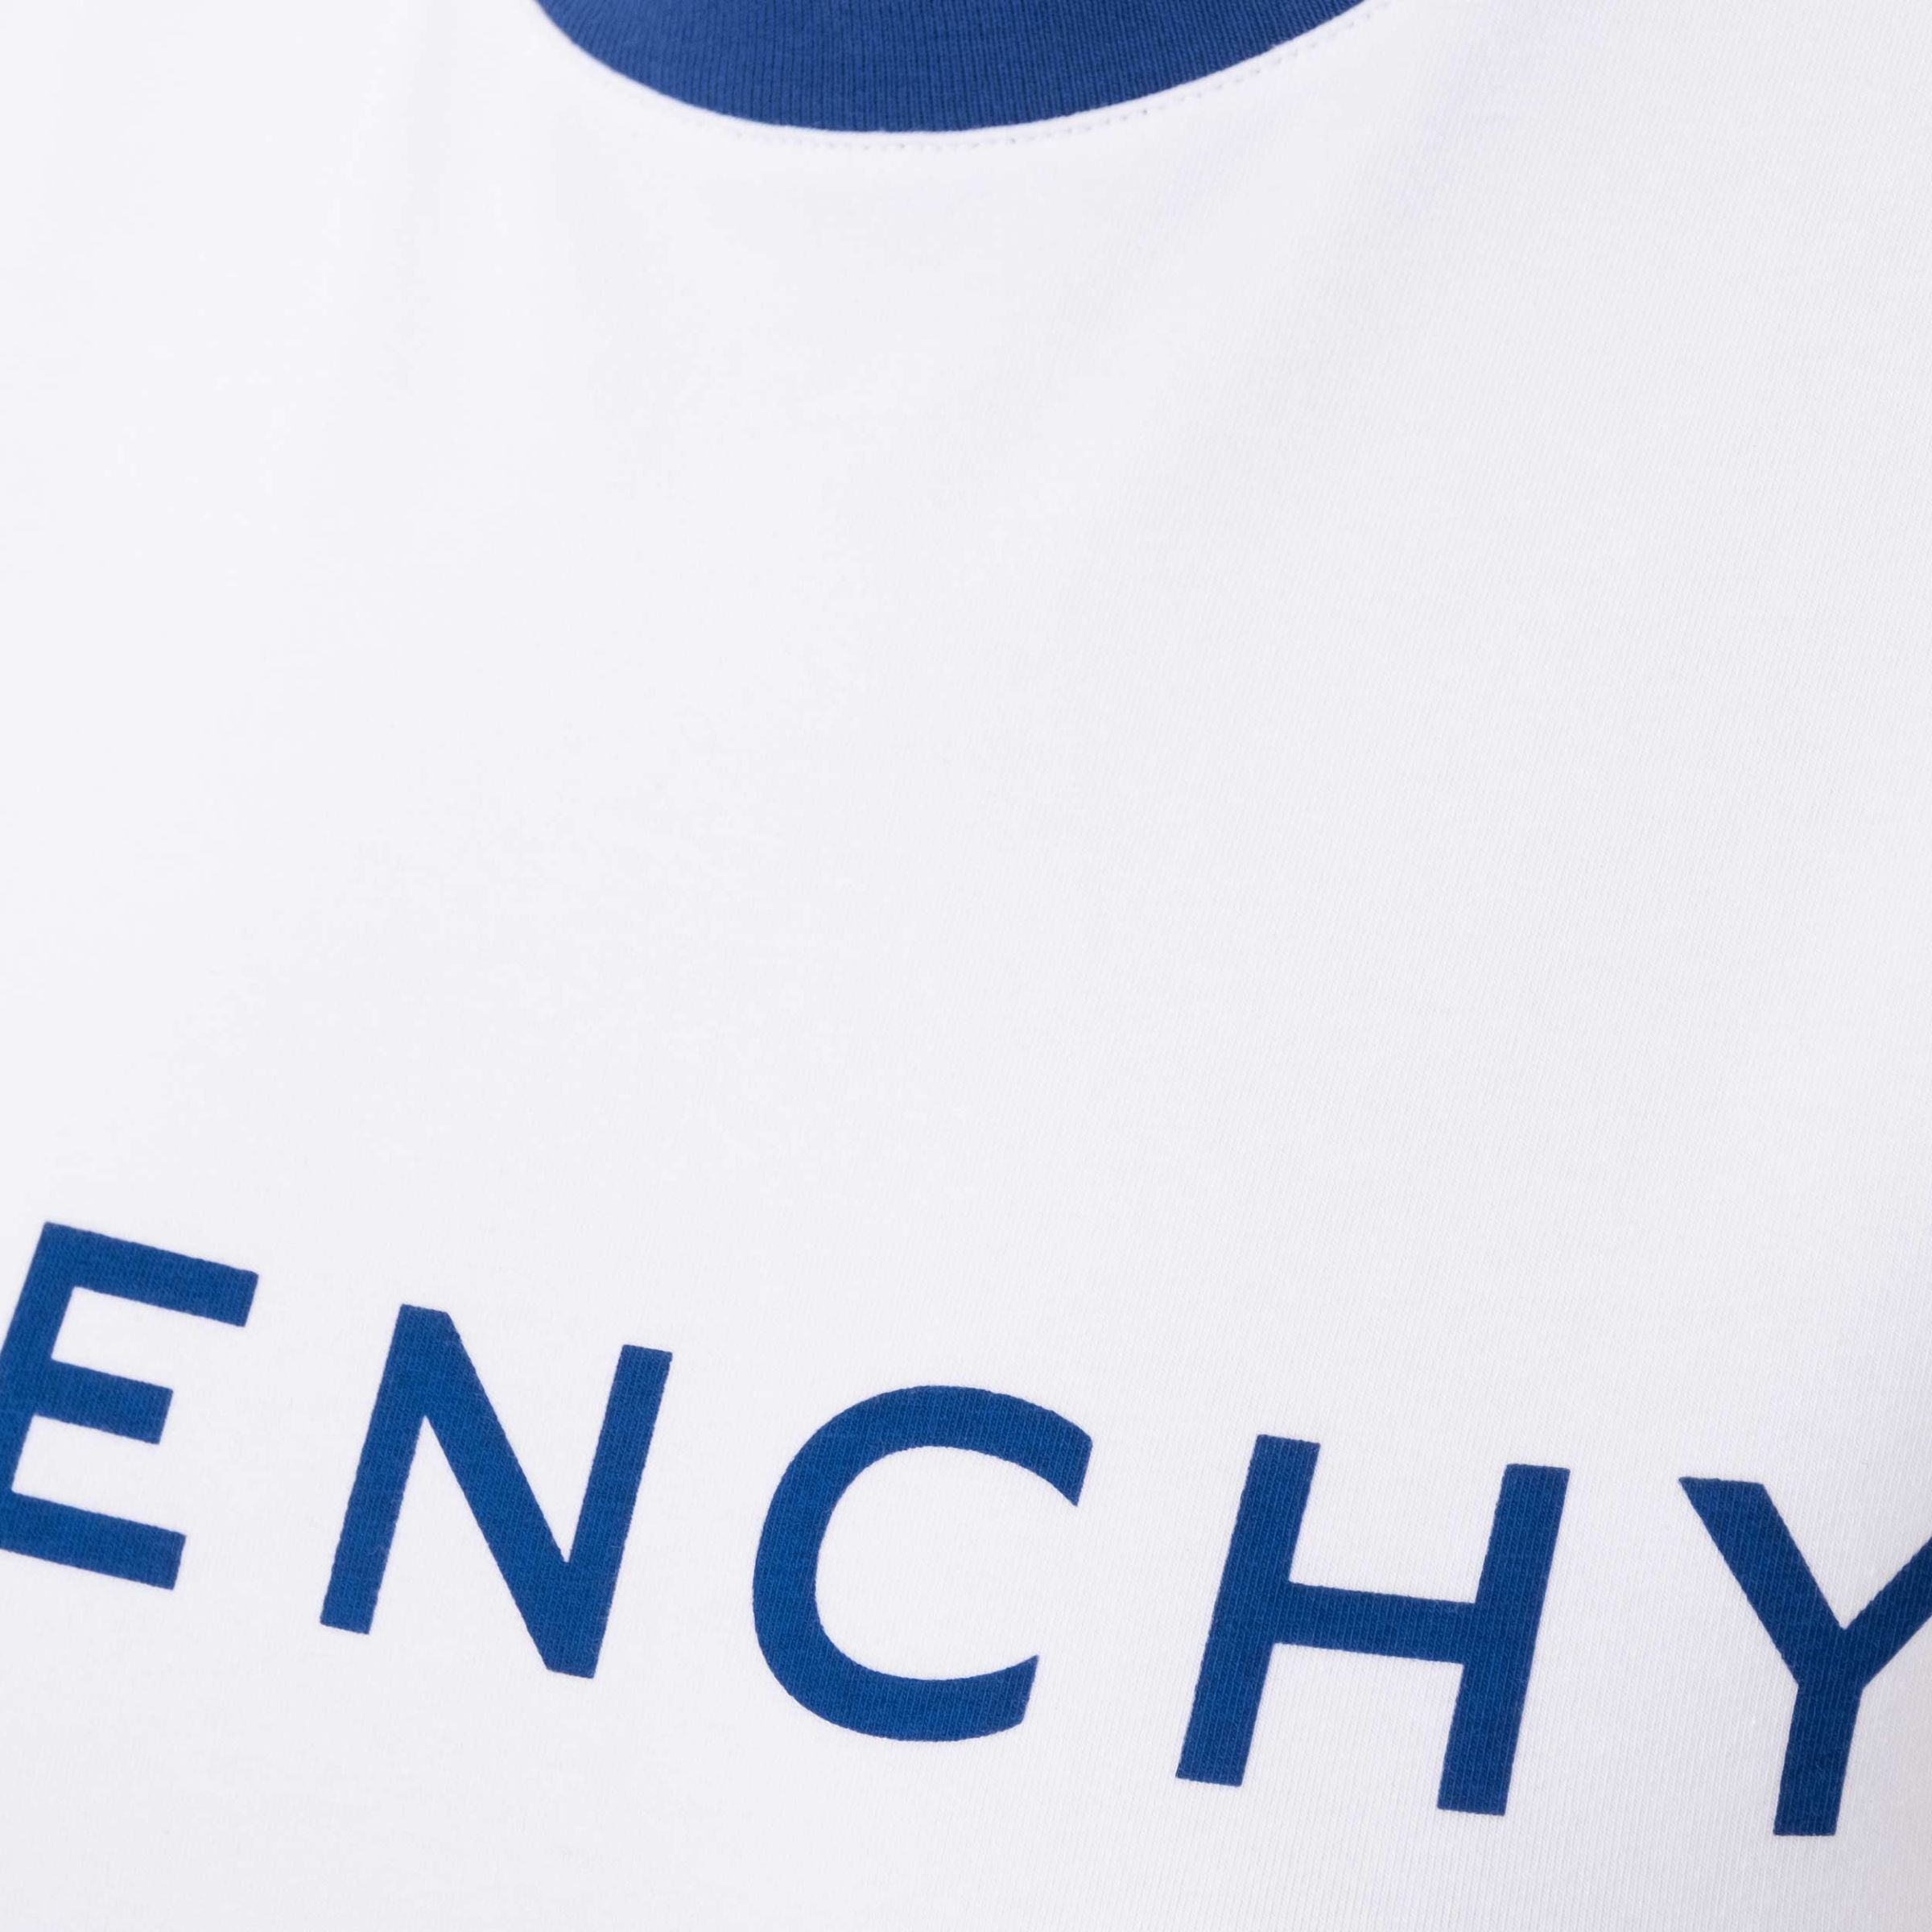 Футболка Givenchy белая